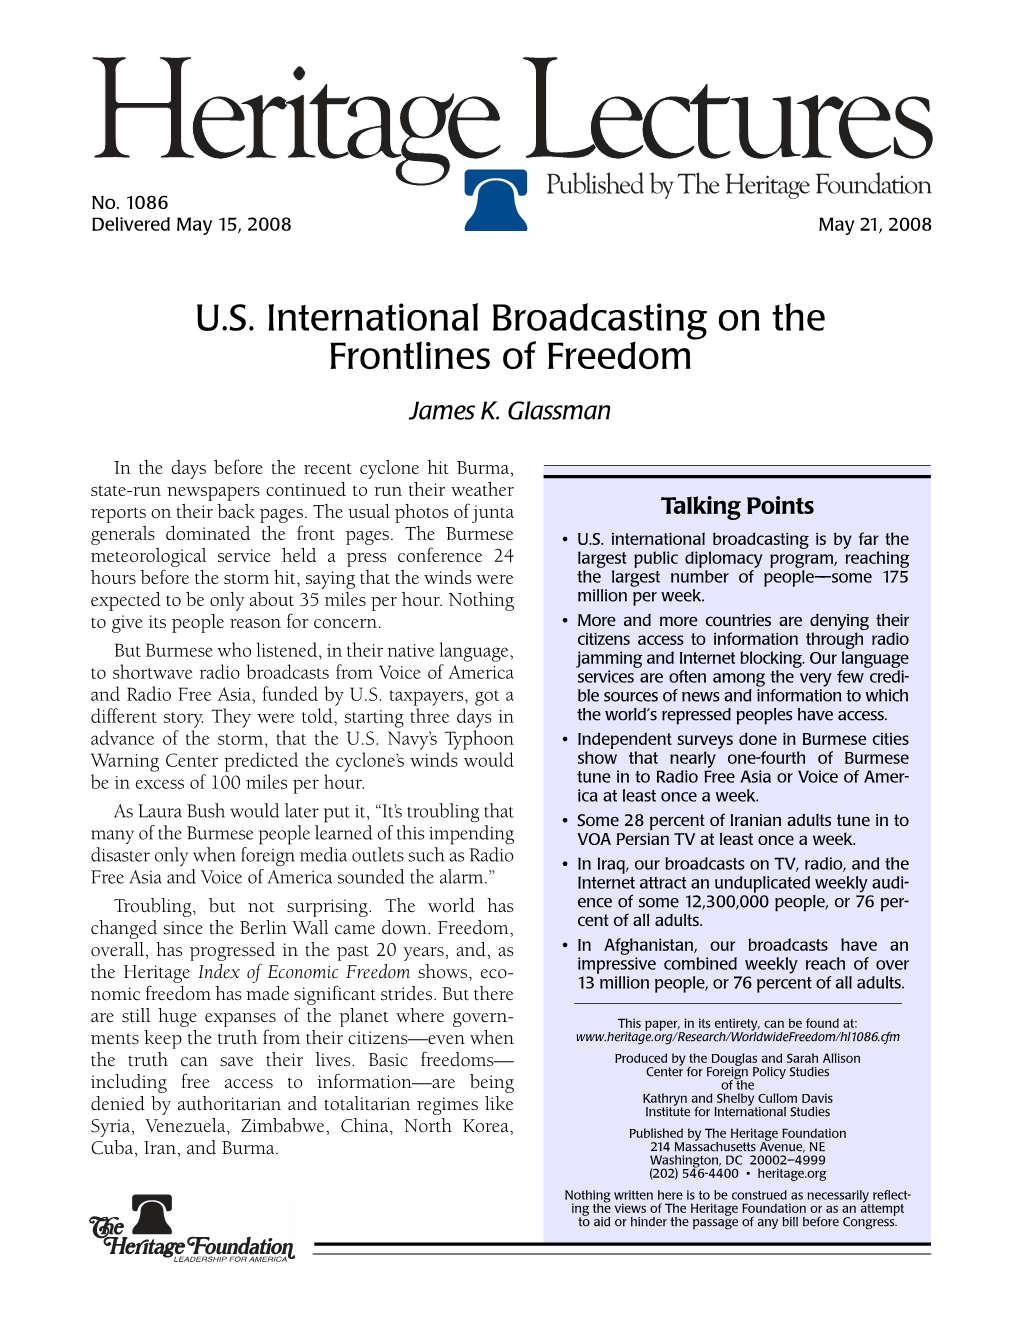 U.S. International Broadcasting on the Frontlines of Freedom James K